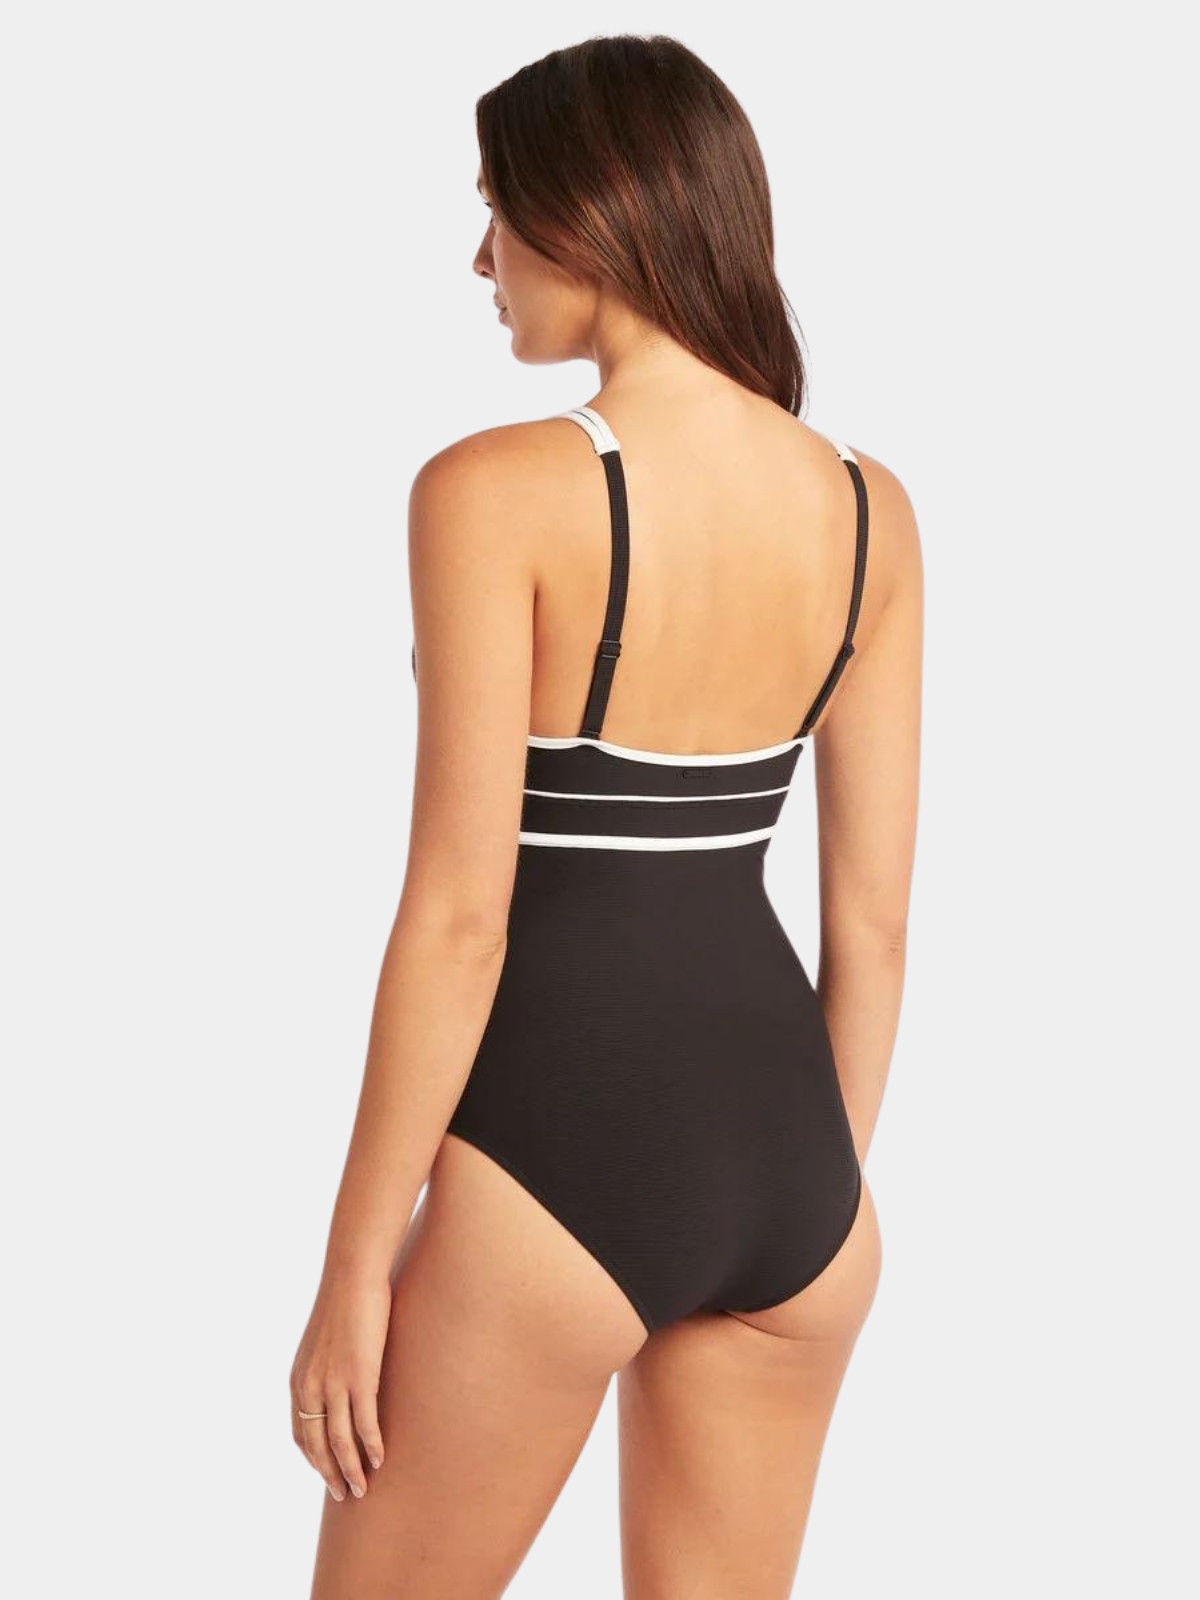 https://www.purelyswim.com/wp-content/uploads/2023/01/sea-level-womens-elite-panelled-longline-one-piece-swimsuit-back.jpg